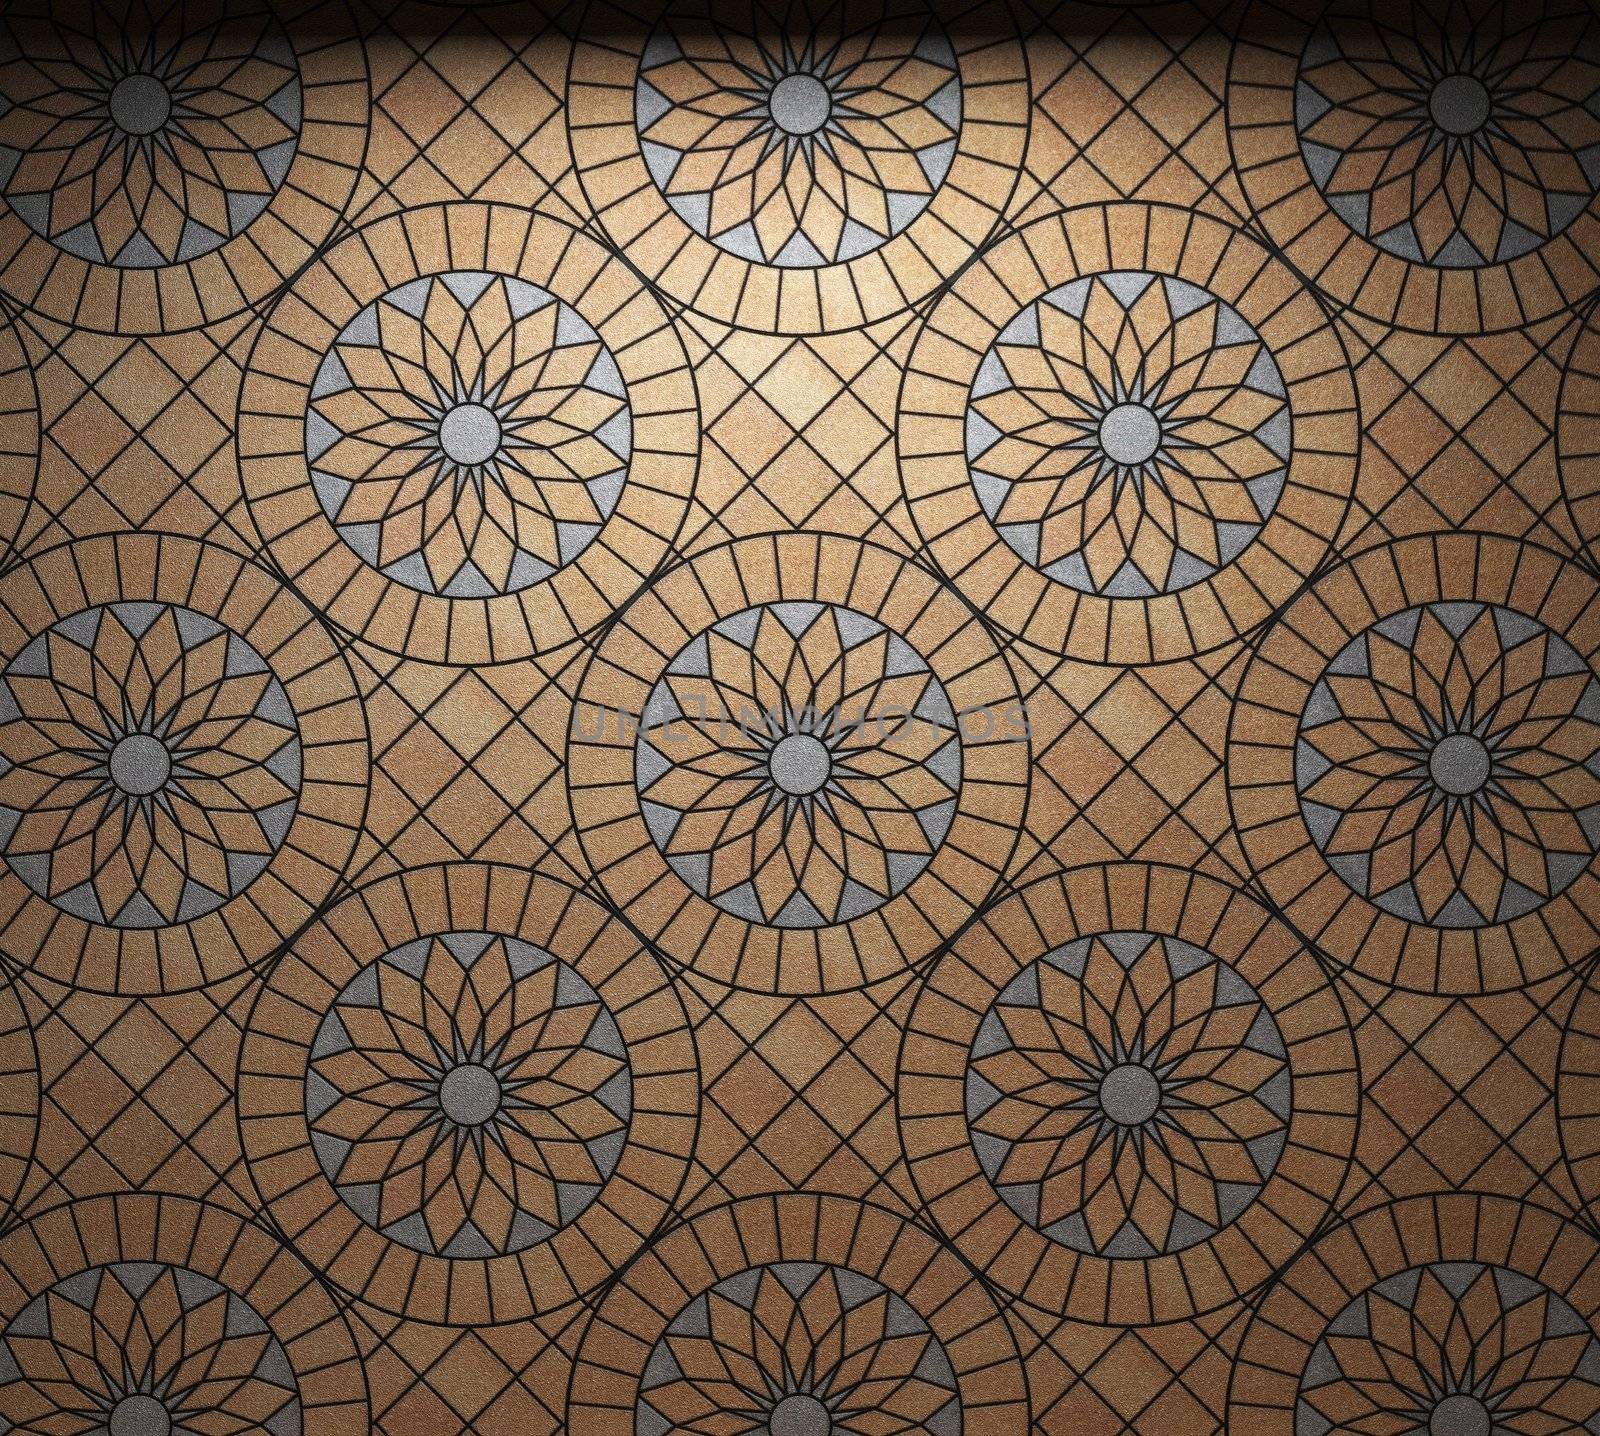 illuminated tile wall by icetray